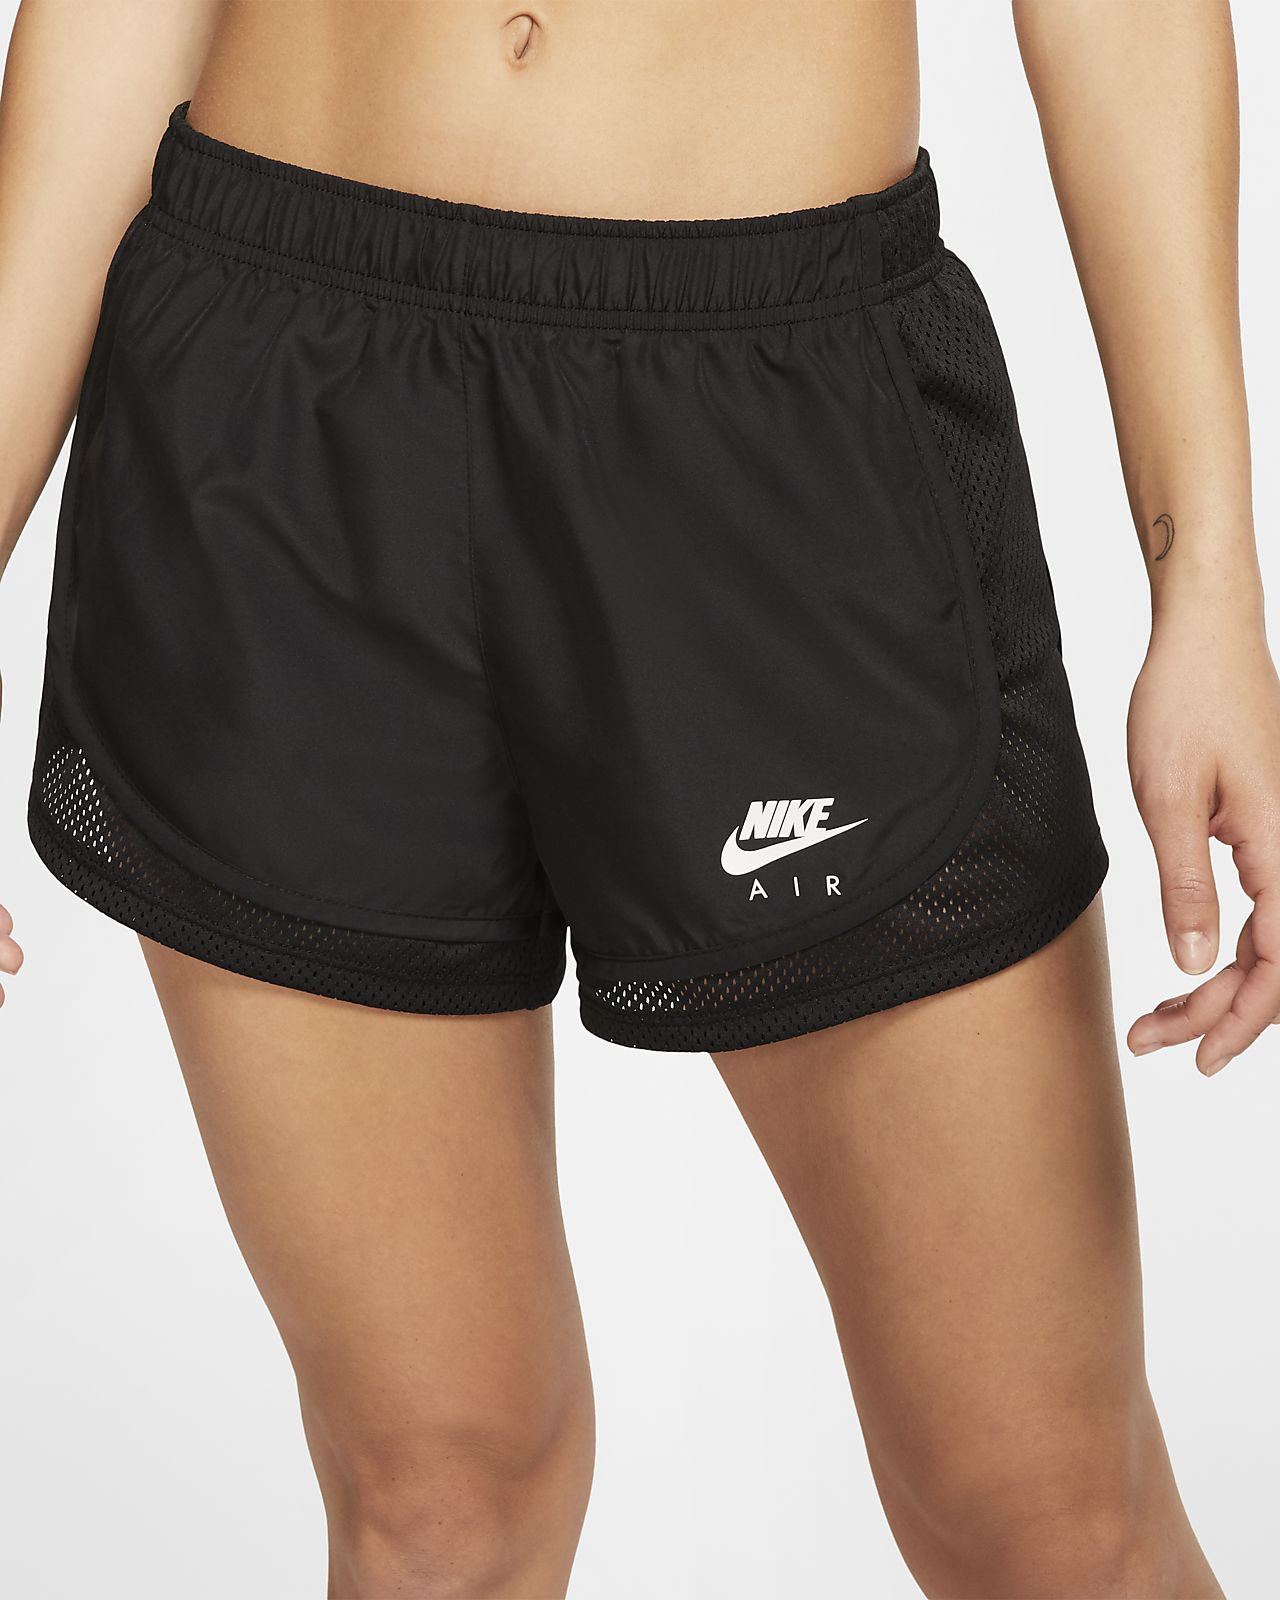 nike womens running shorts clearance